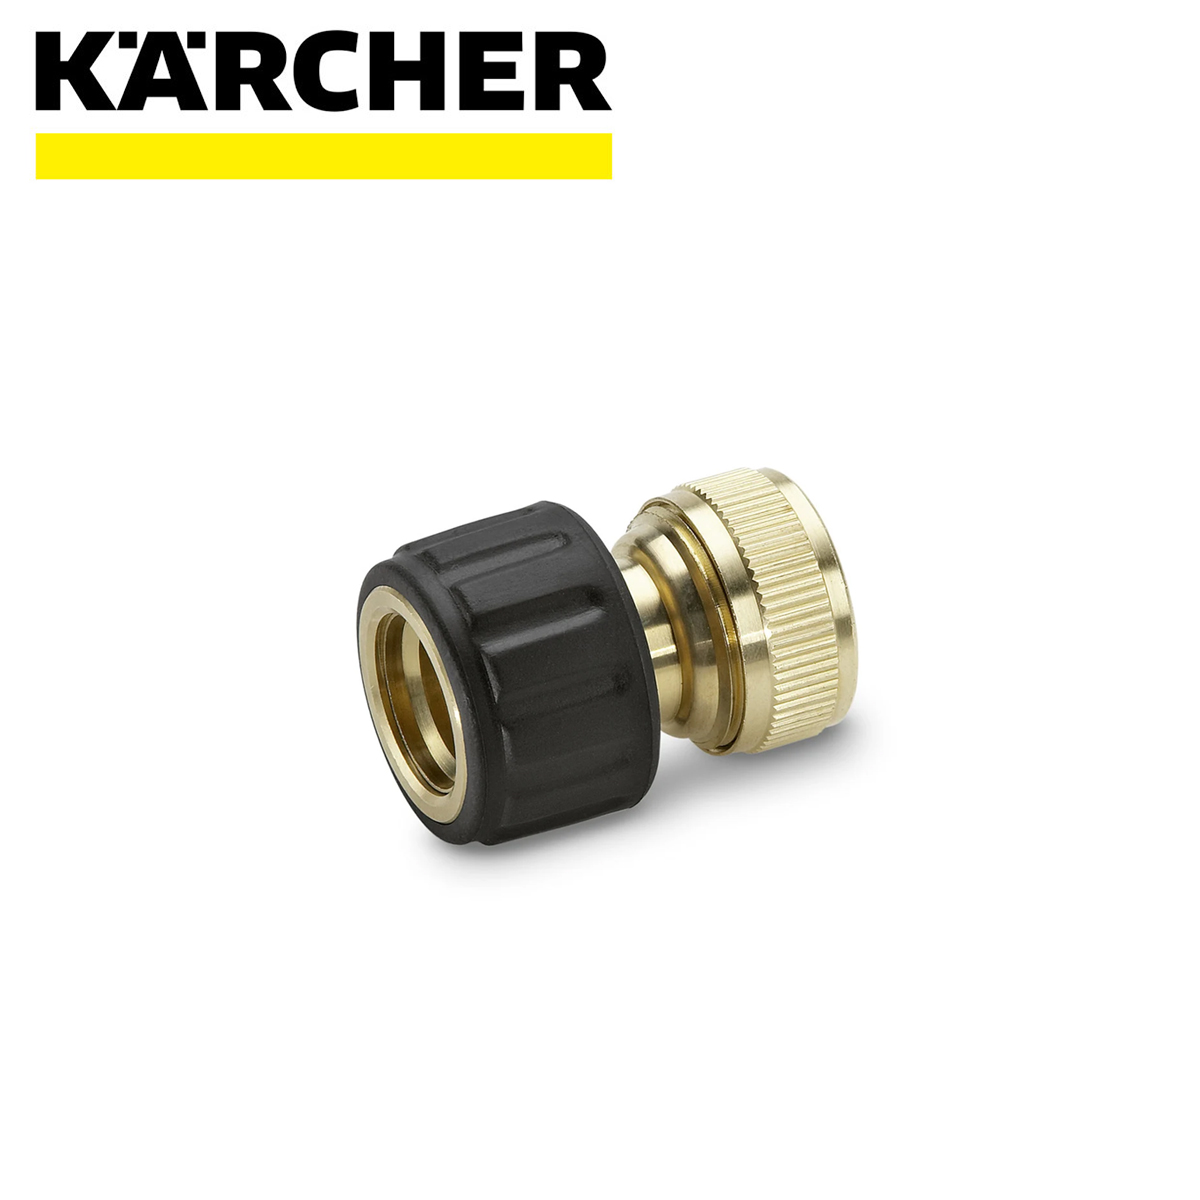 32 645 15 18 226. Латунный коннектор 1/2 Karcher. Керхер латунная муфта 1/2 дюйма. Karcher / латунный коннектор с аквастопом 1/2''. Коннектор Karcher 26450150.